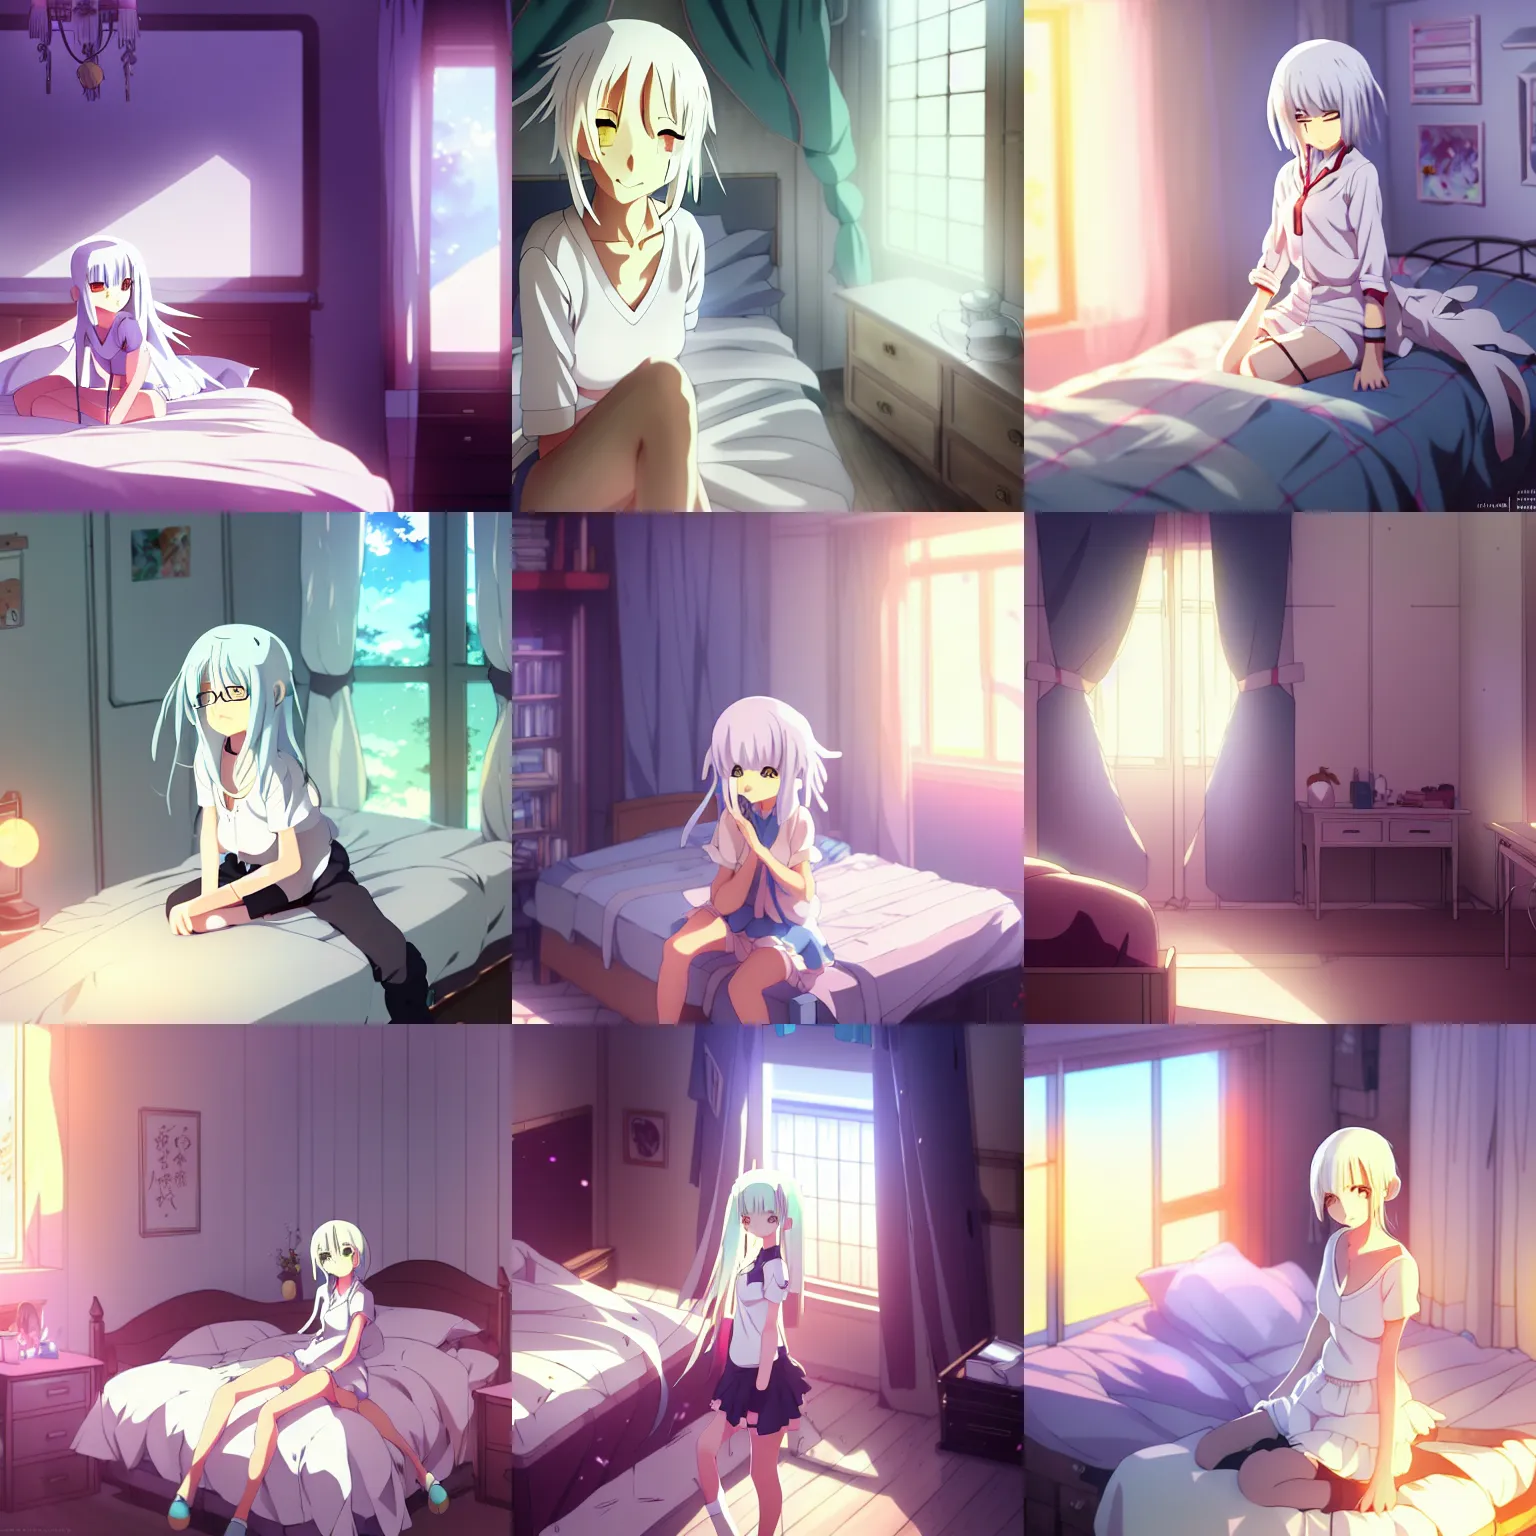 Prompt: high quality anime visual of a cute girl with white hair in her room interior, by makoto shinkai, crunchyroll, pixiv, danbooru, hd, detailed, cel shaded, digital art, lighting